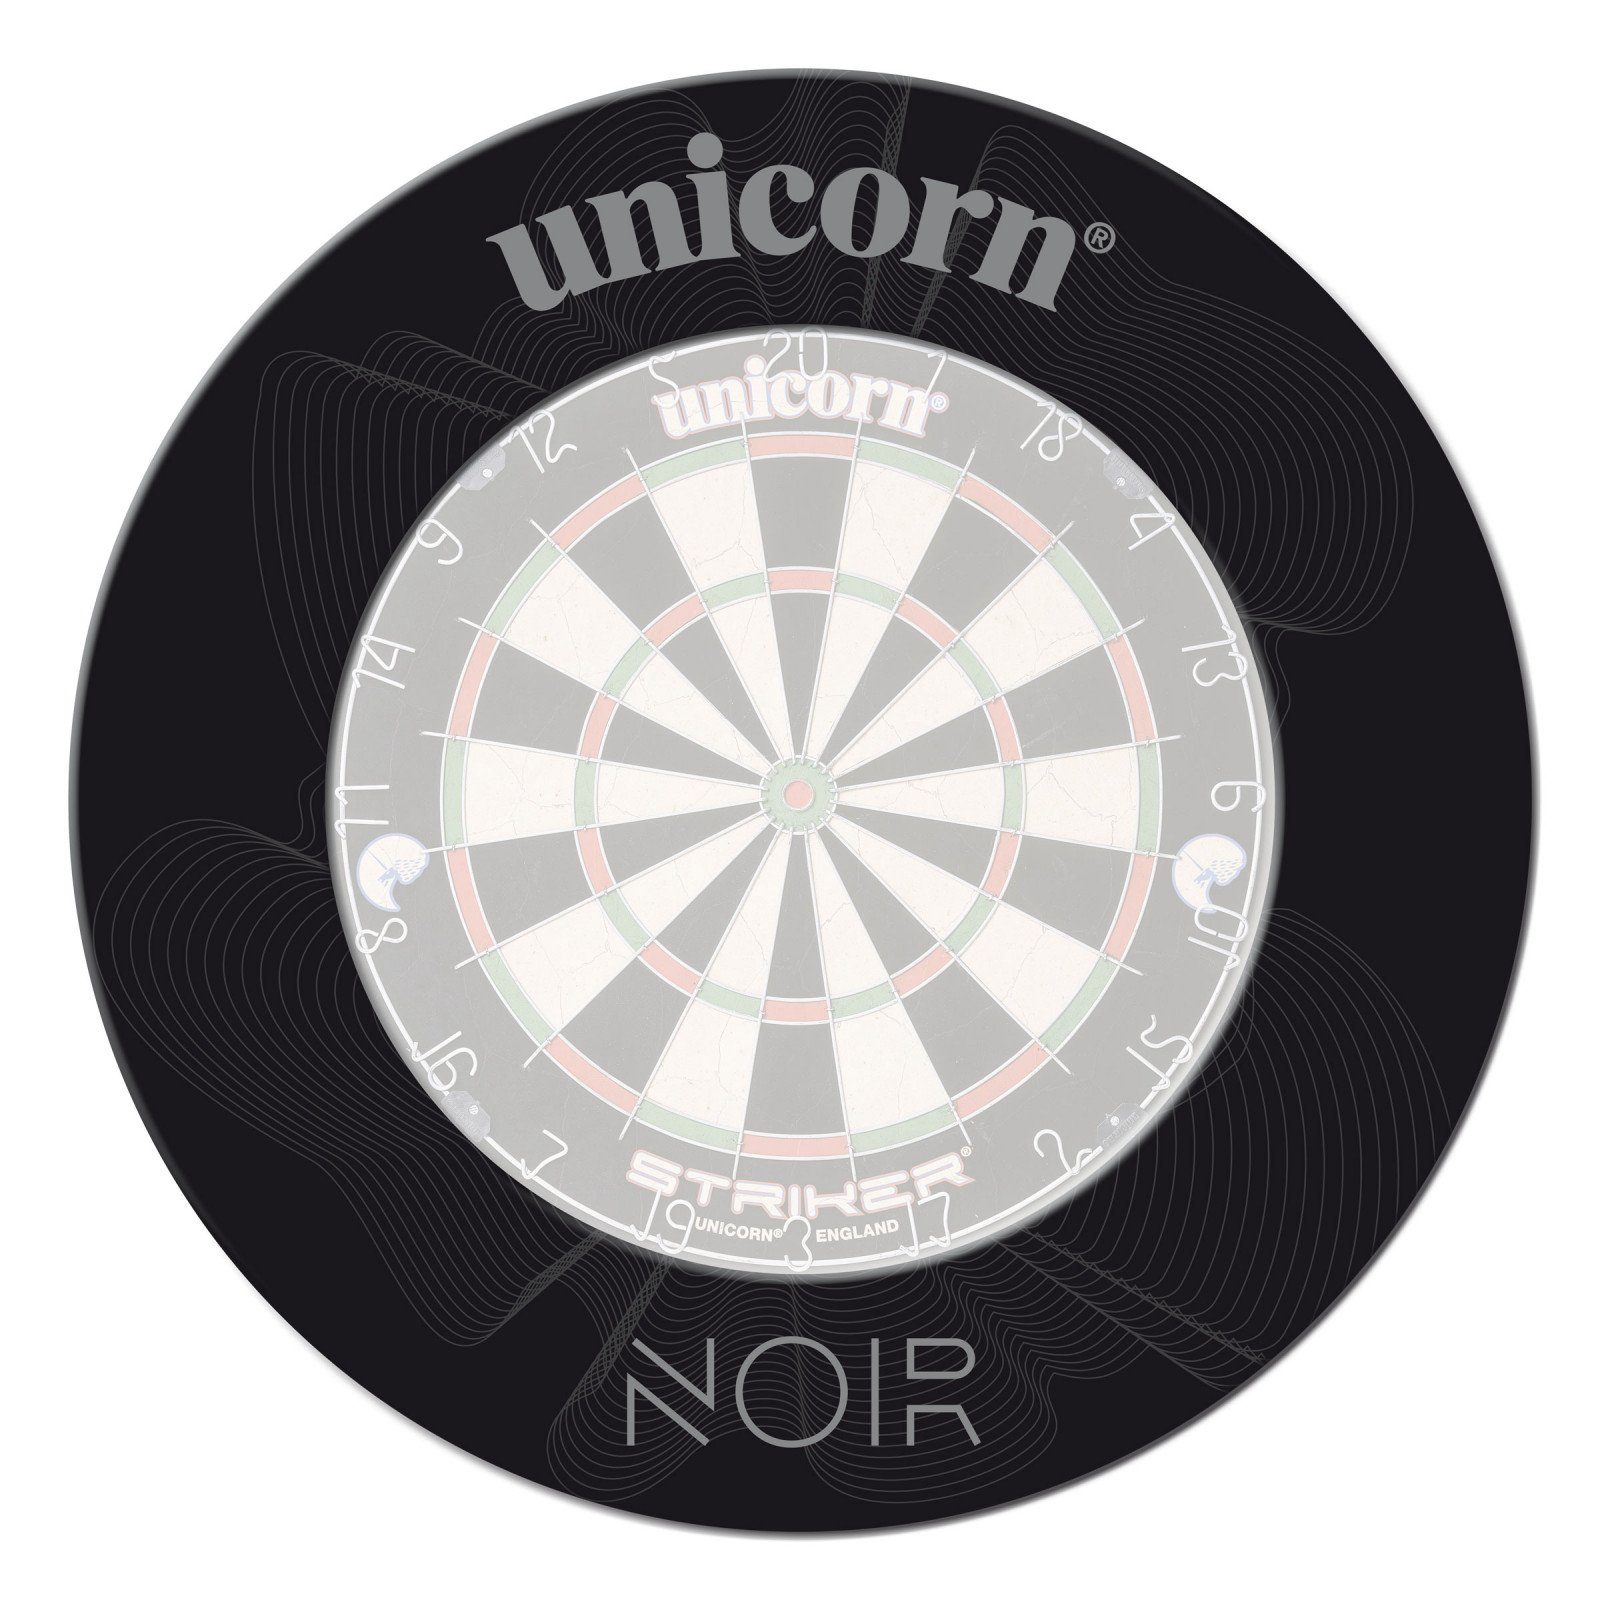 Dartboard Surround - Noir Dart-Wandschutz Professional schwarz unicorn